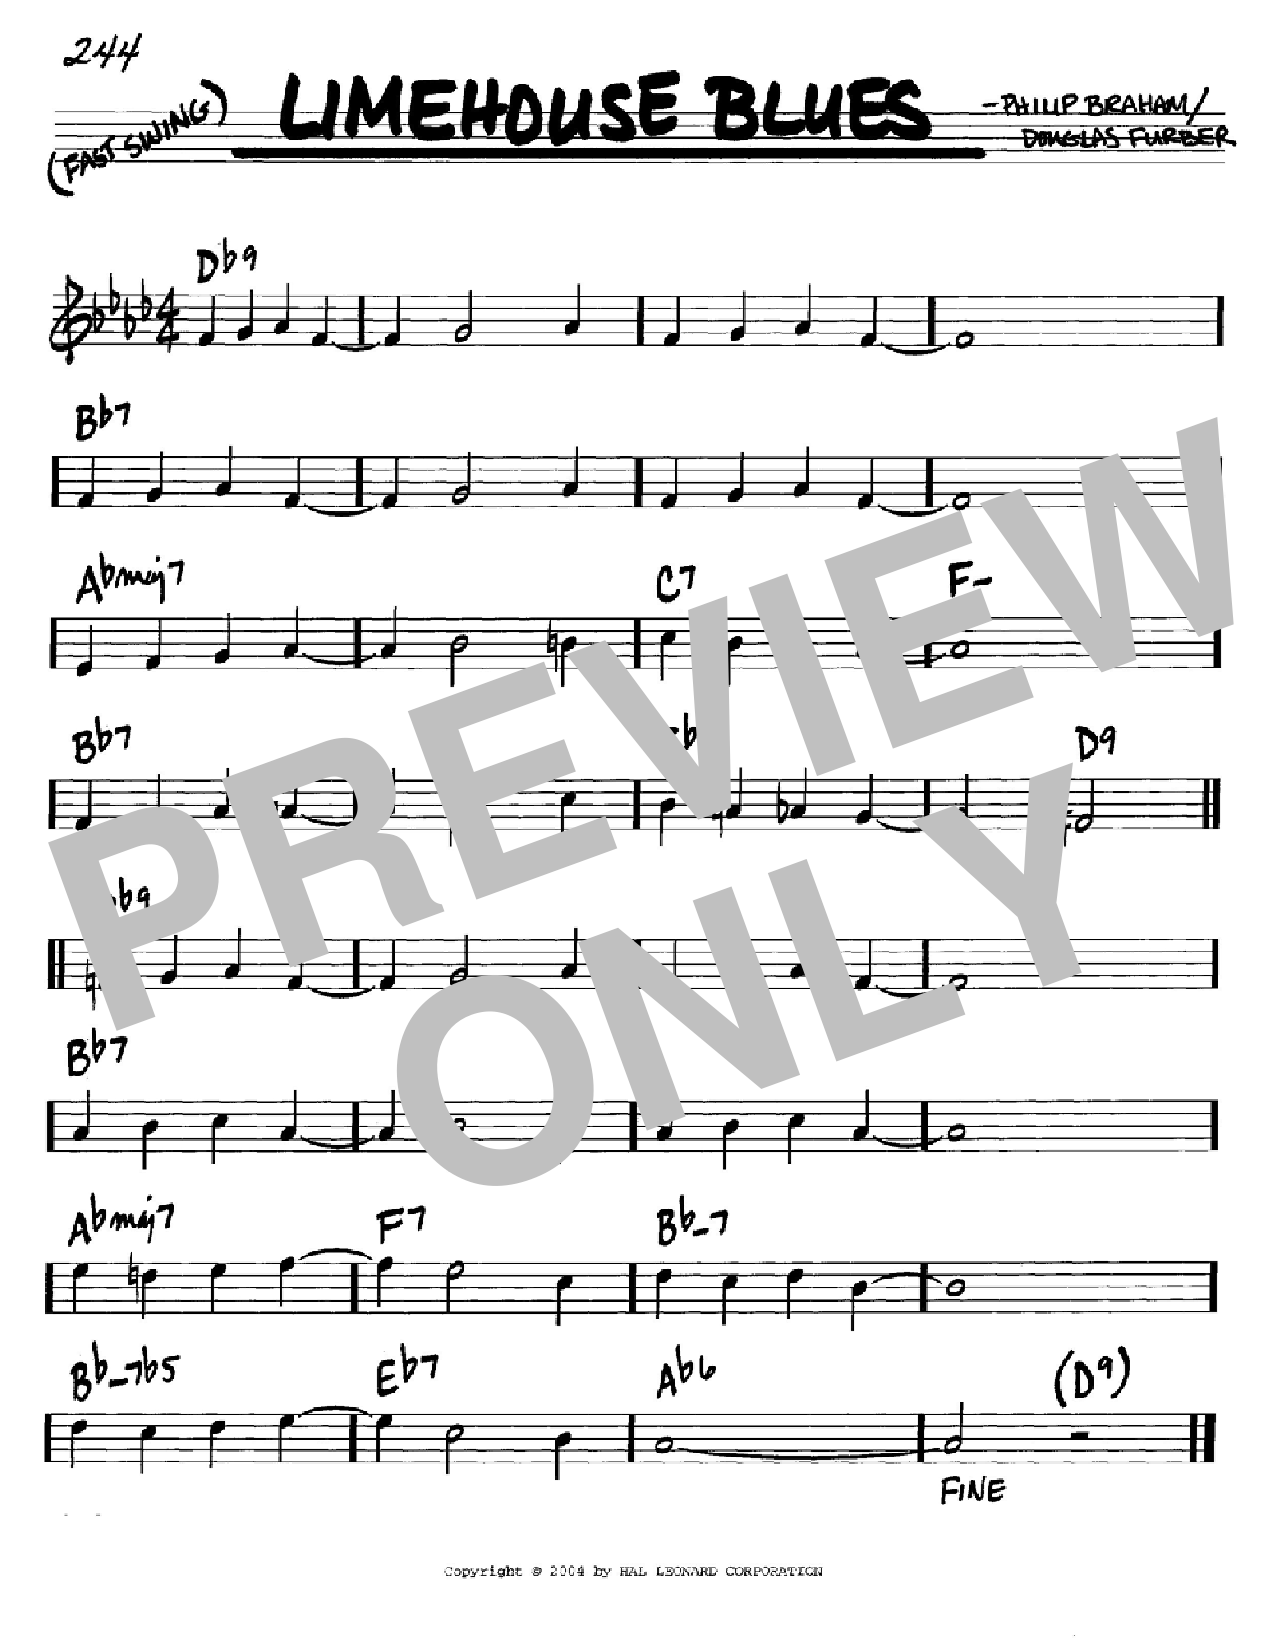 Douglas Furber Limehouse Blues Sheet Music Notes & Chords for Banjo - Download or Print PDF